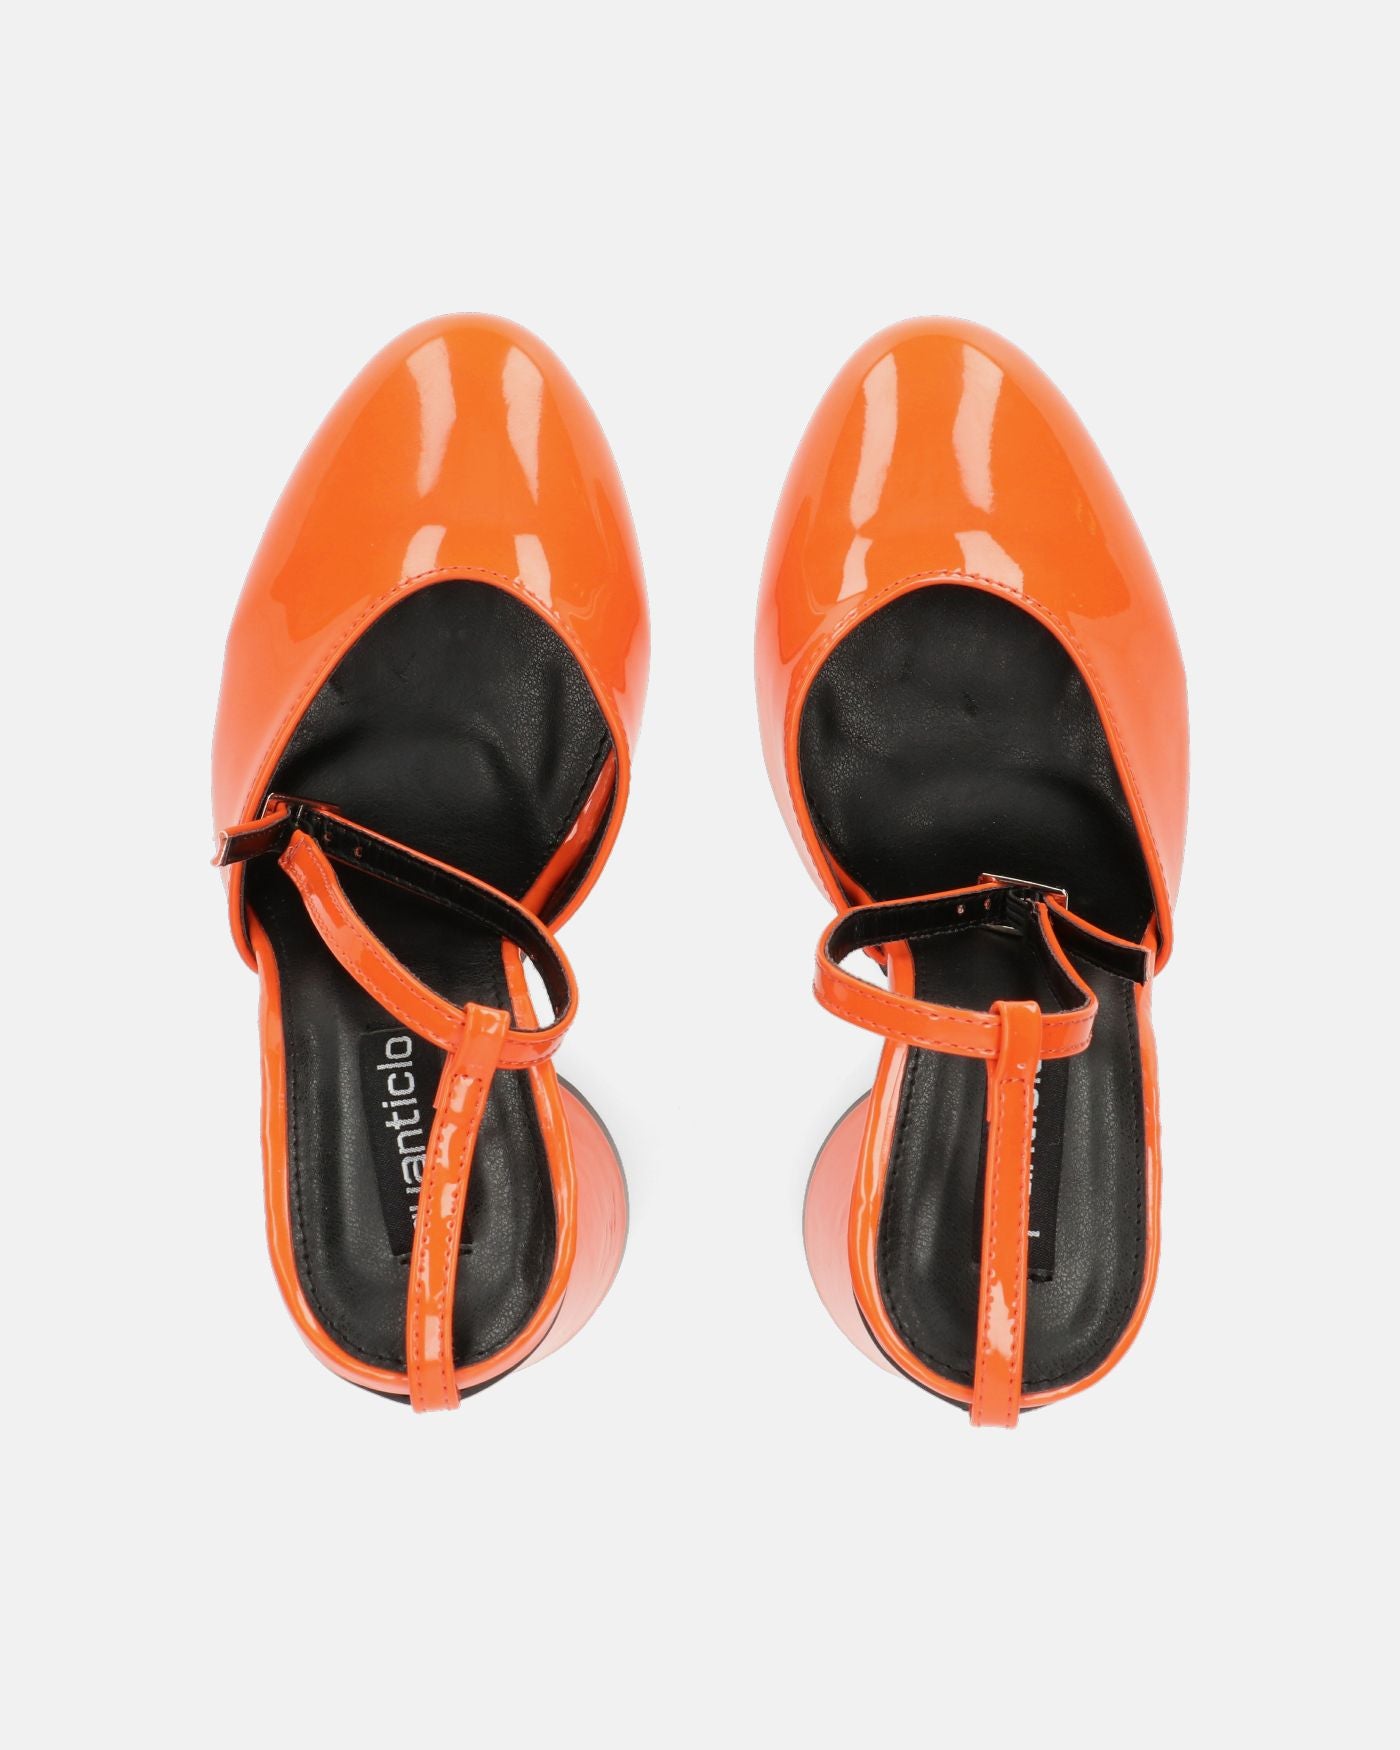 MAYBELLE - sandales glassy orange à talon cylindrique